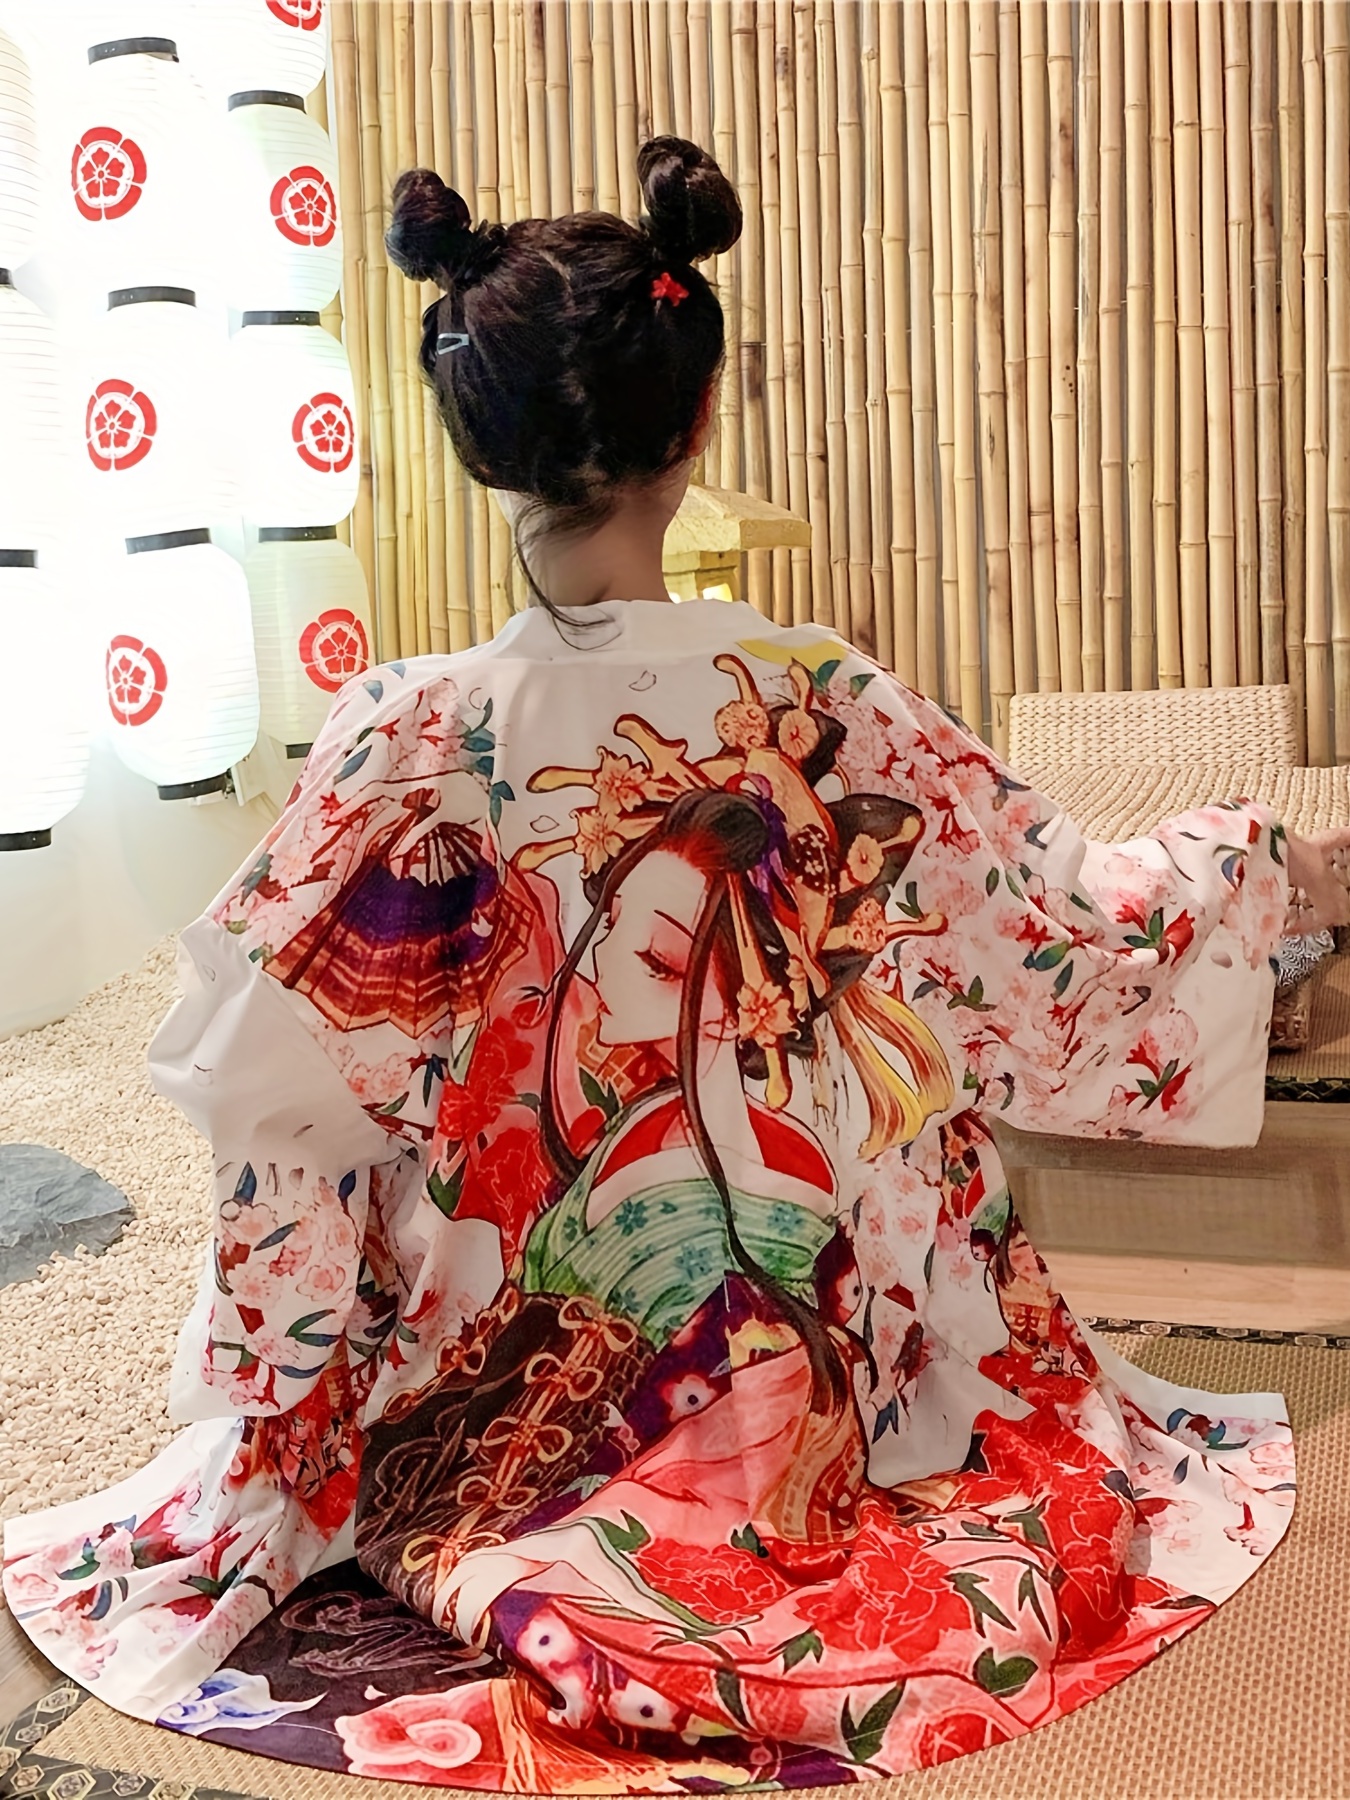 Blood Supply Original Kimono Design Japanese Furisode Sleeve Hollow Out Top  Jacquard Dark Goth Suede Halloween Mesh Top Blouse